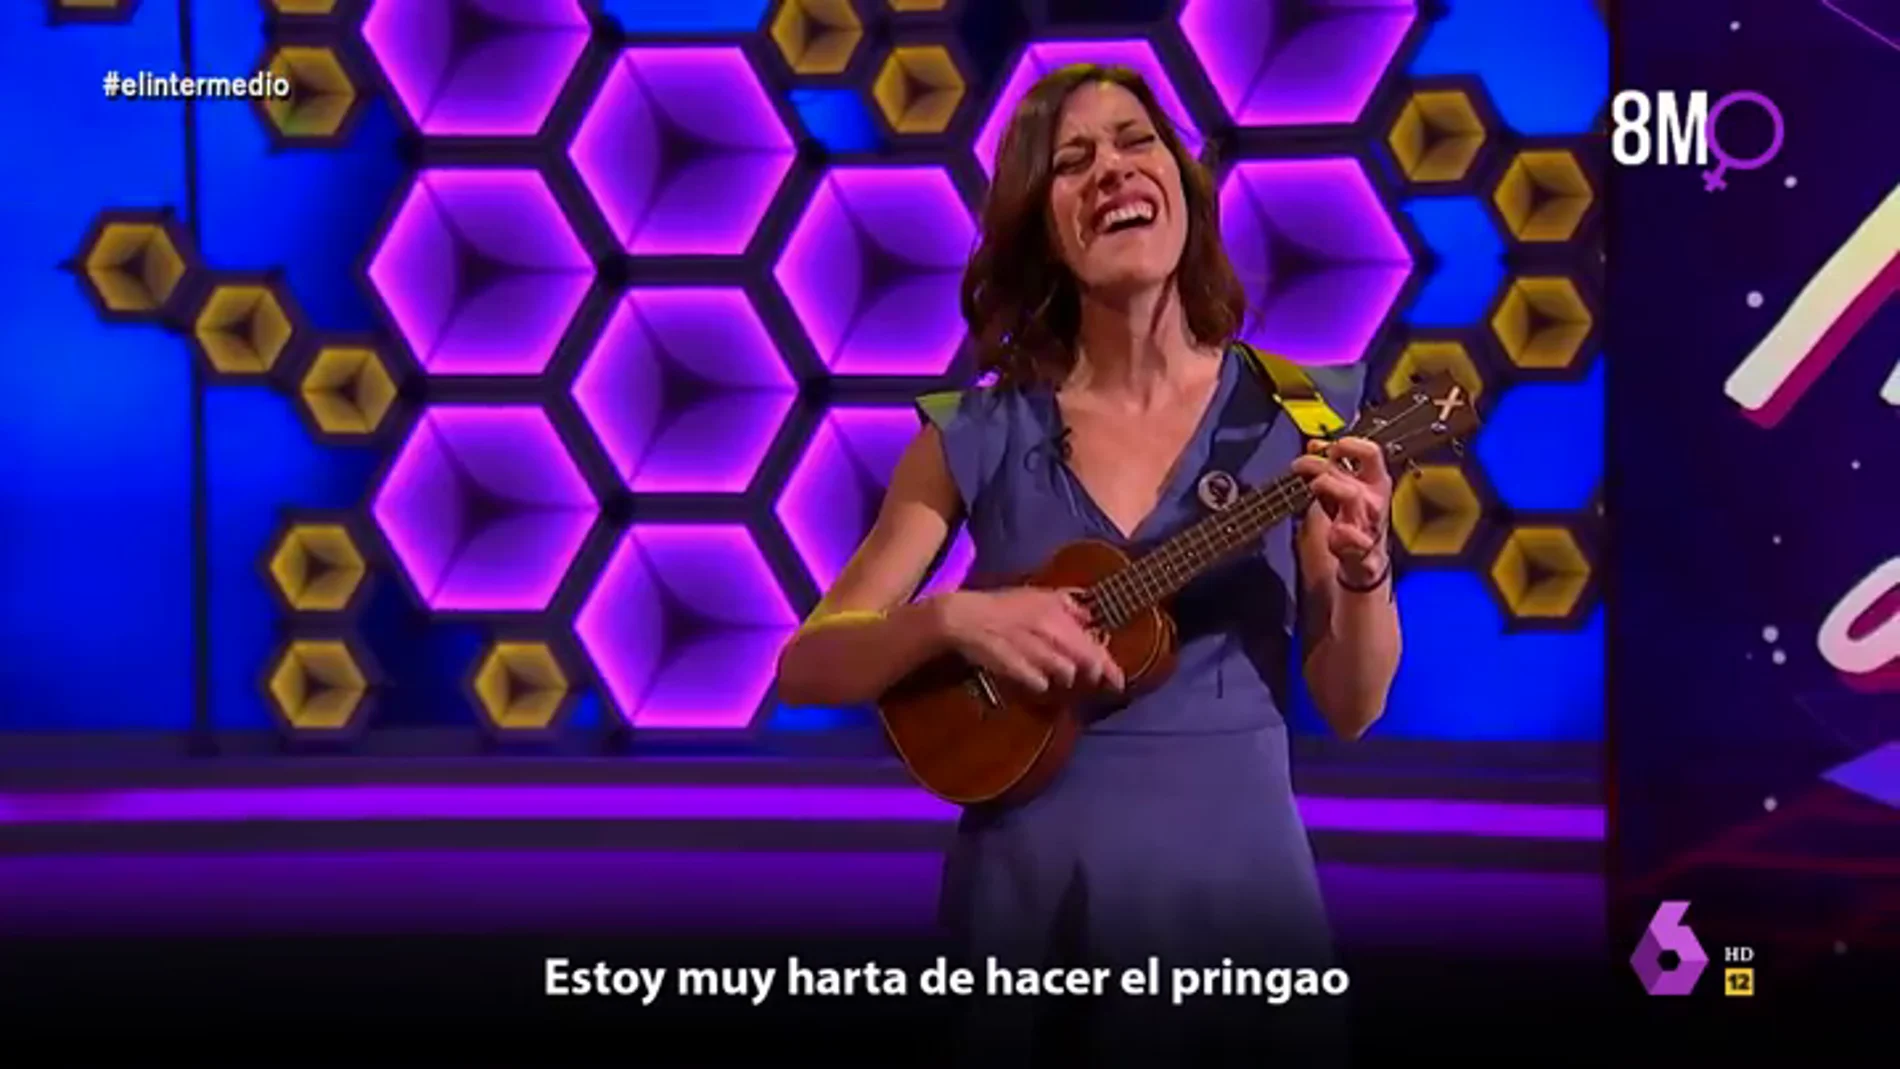 El emotivo himno feminista de Cristina Gallego en directo: "Hoy no me voy a callar, porque hoy tú me vas a escuchar"